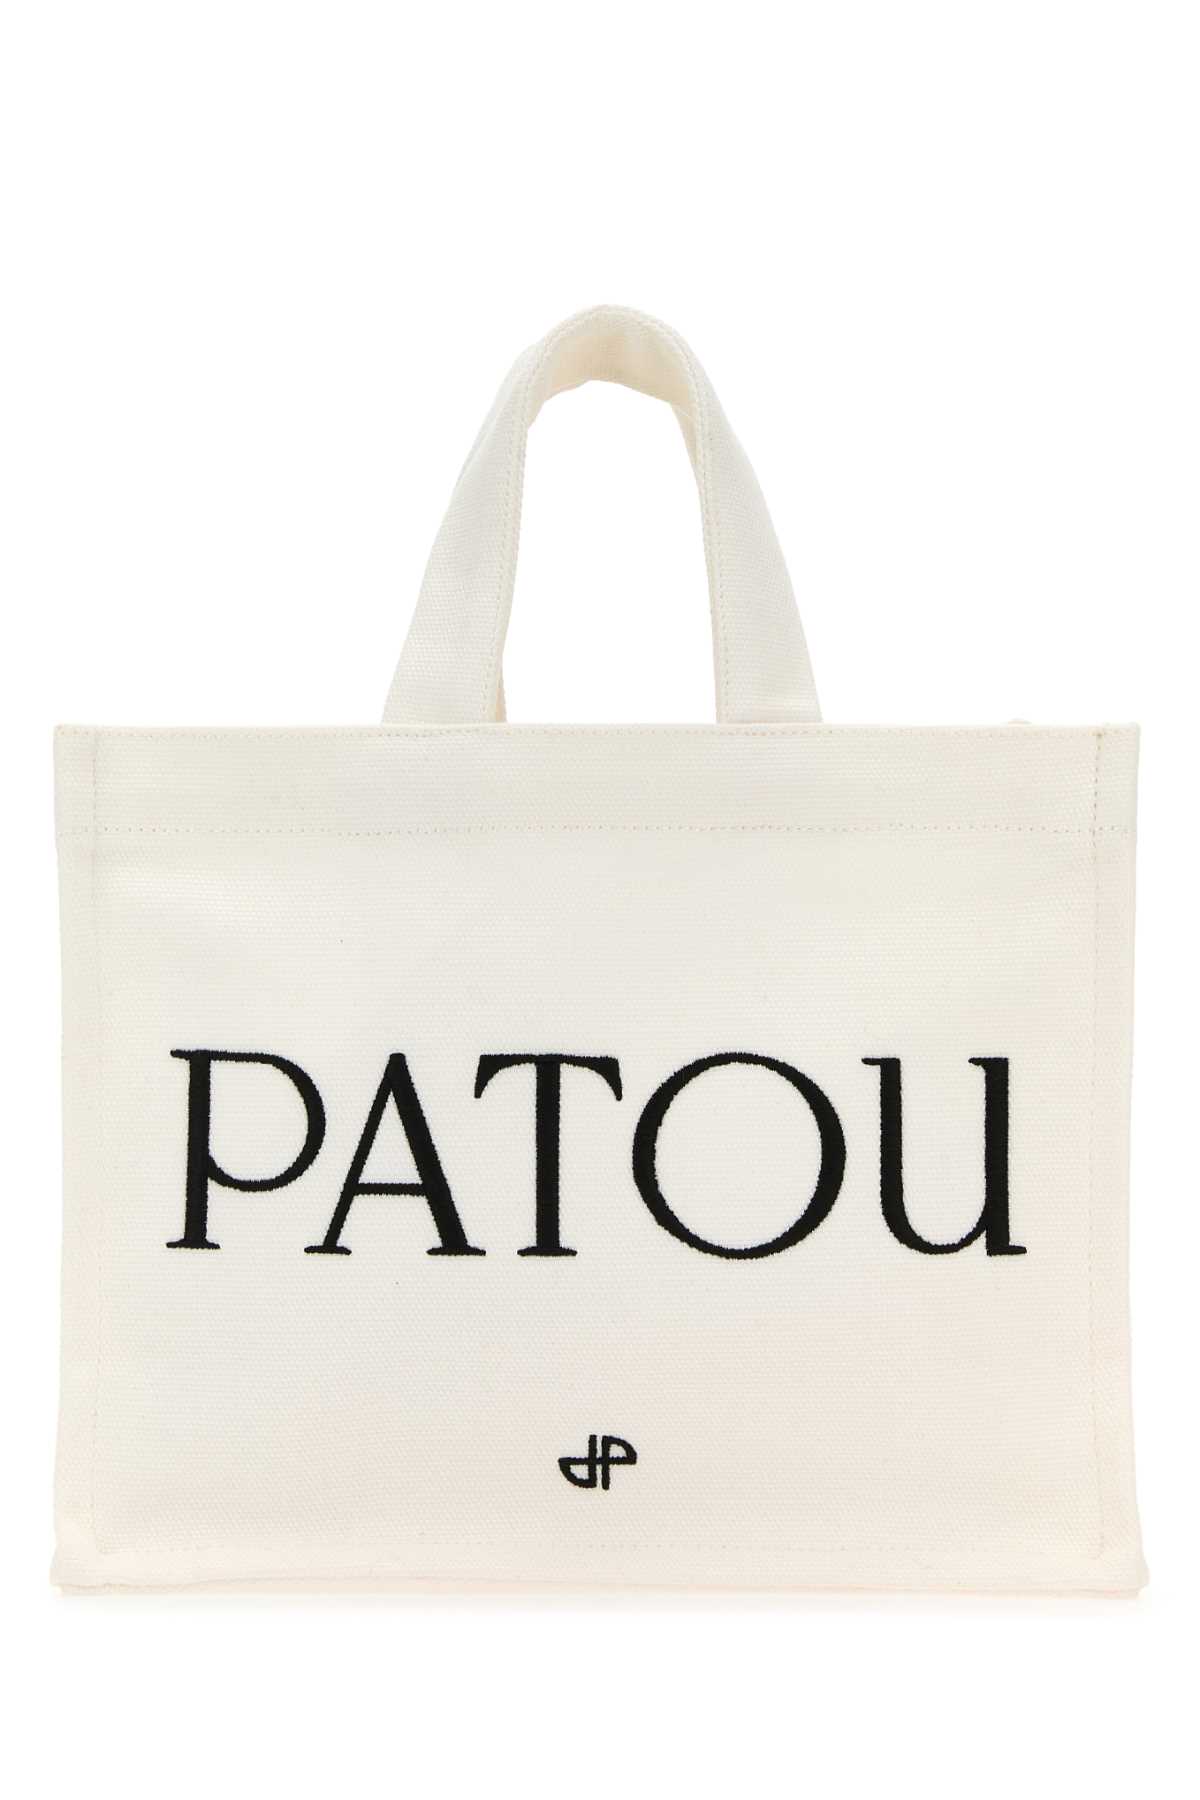 Patou White Canvas Small Tote  Shopping Bag